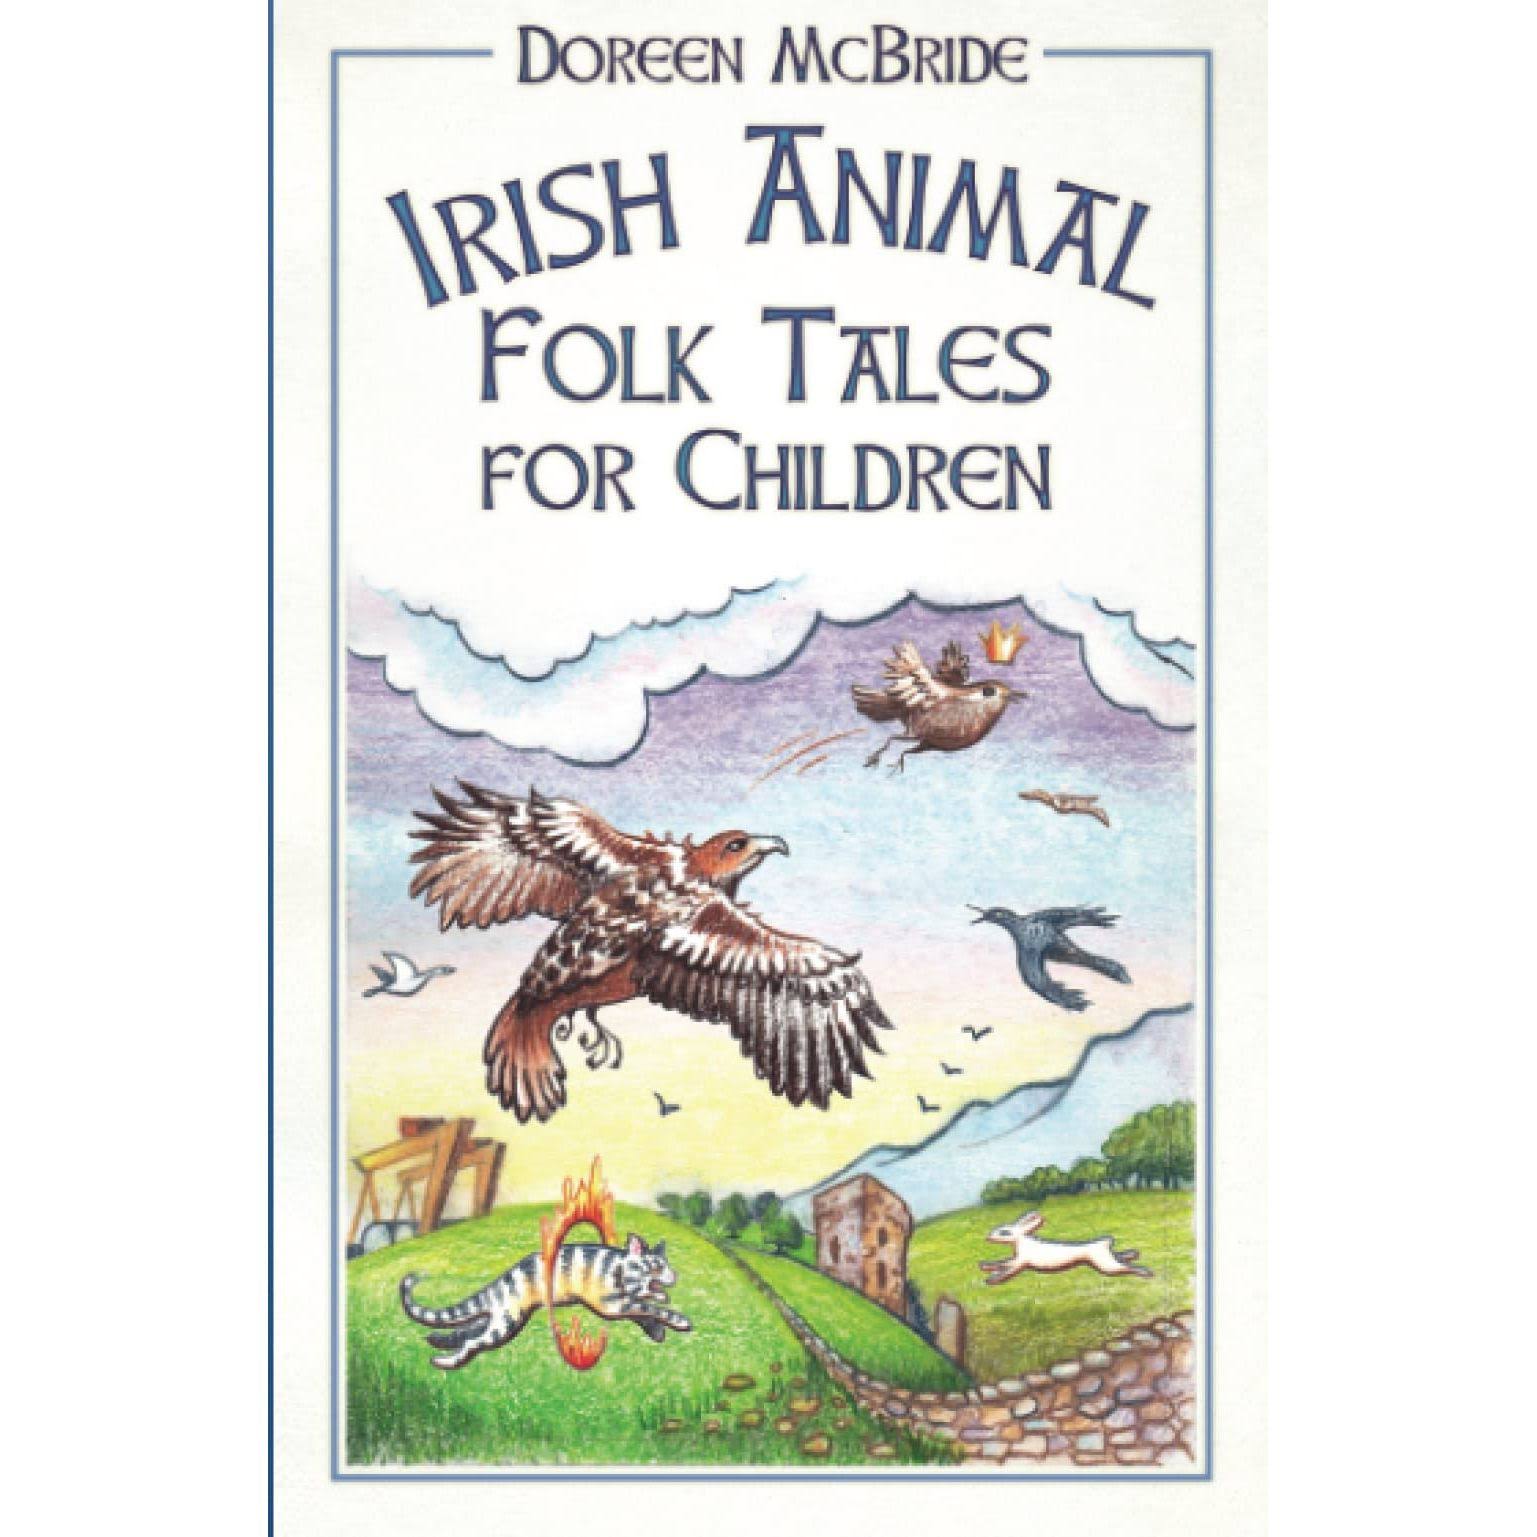 Irish Animal Folk Tales for Children [Book]